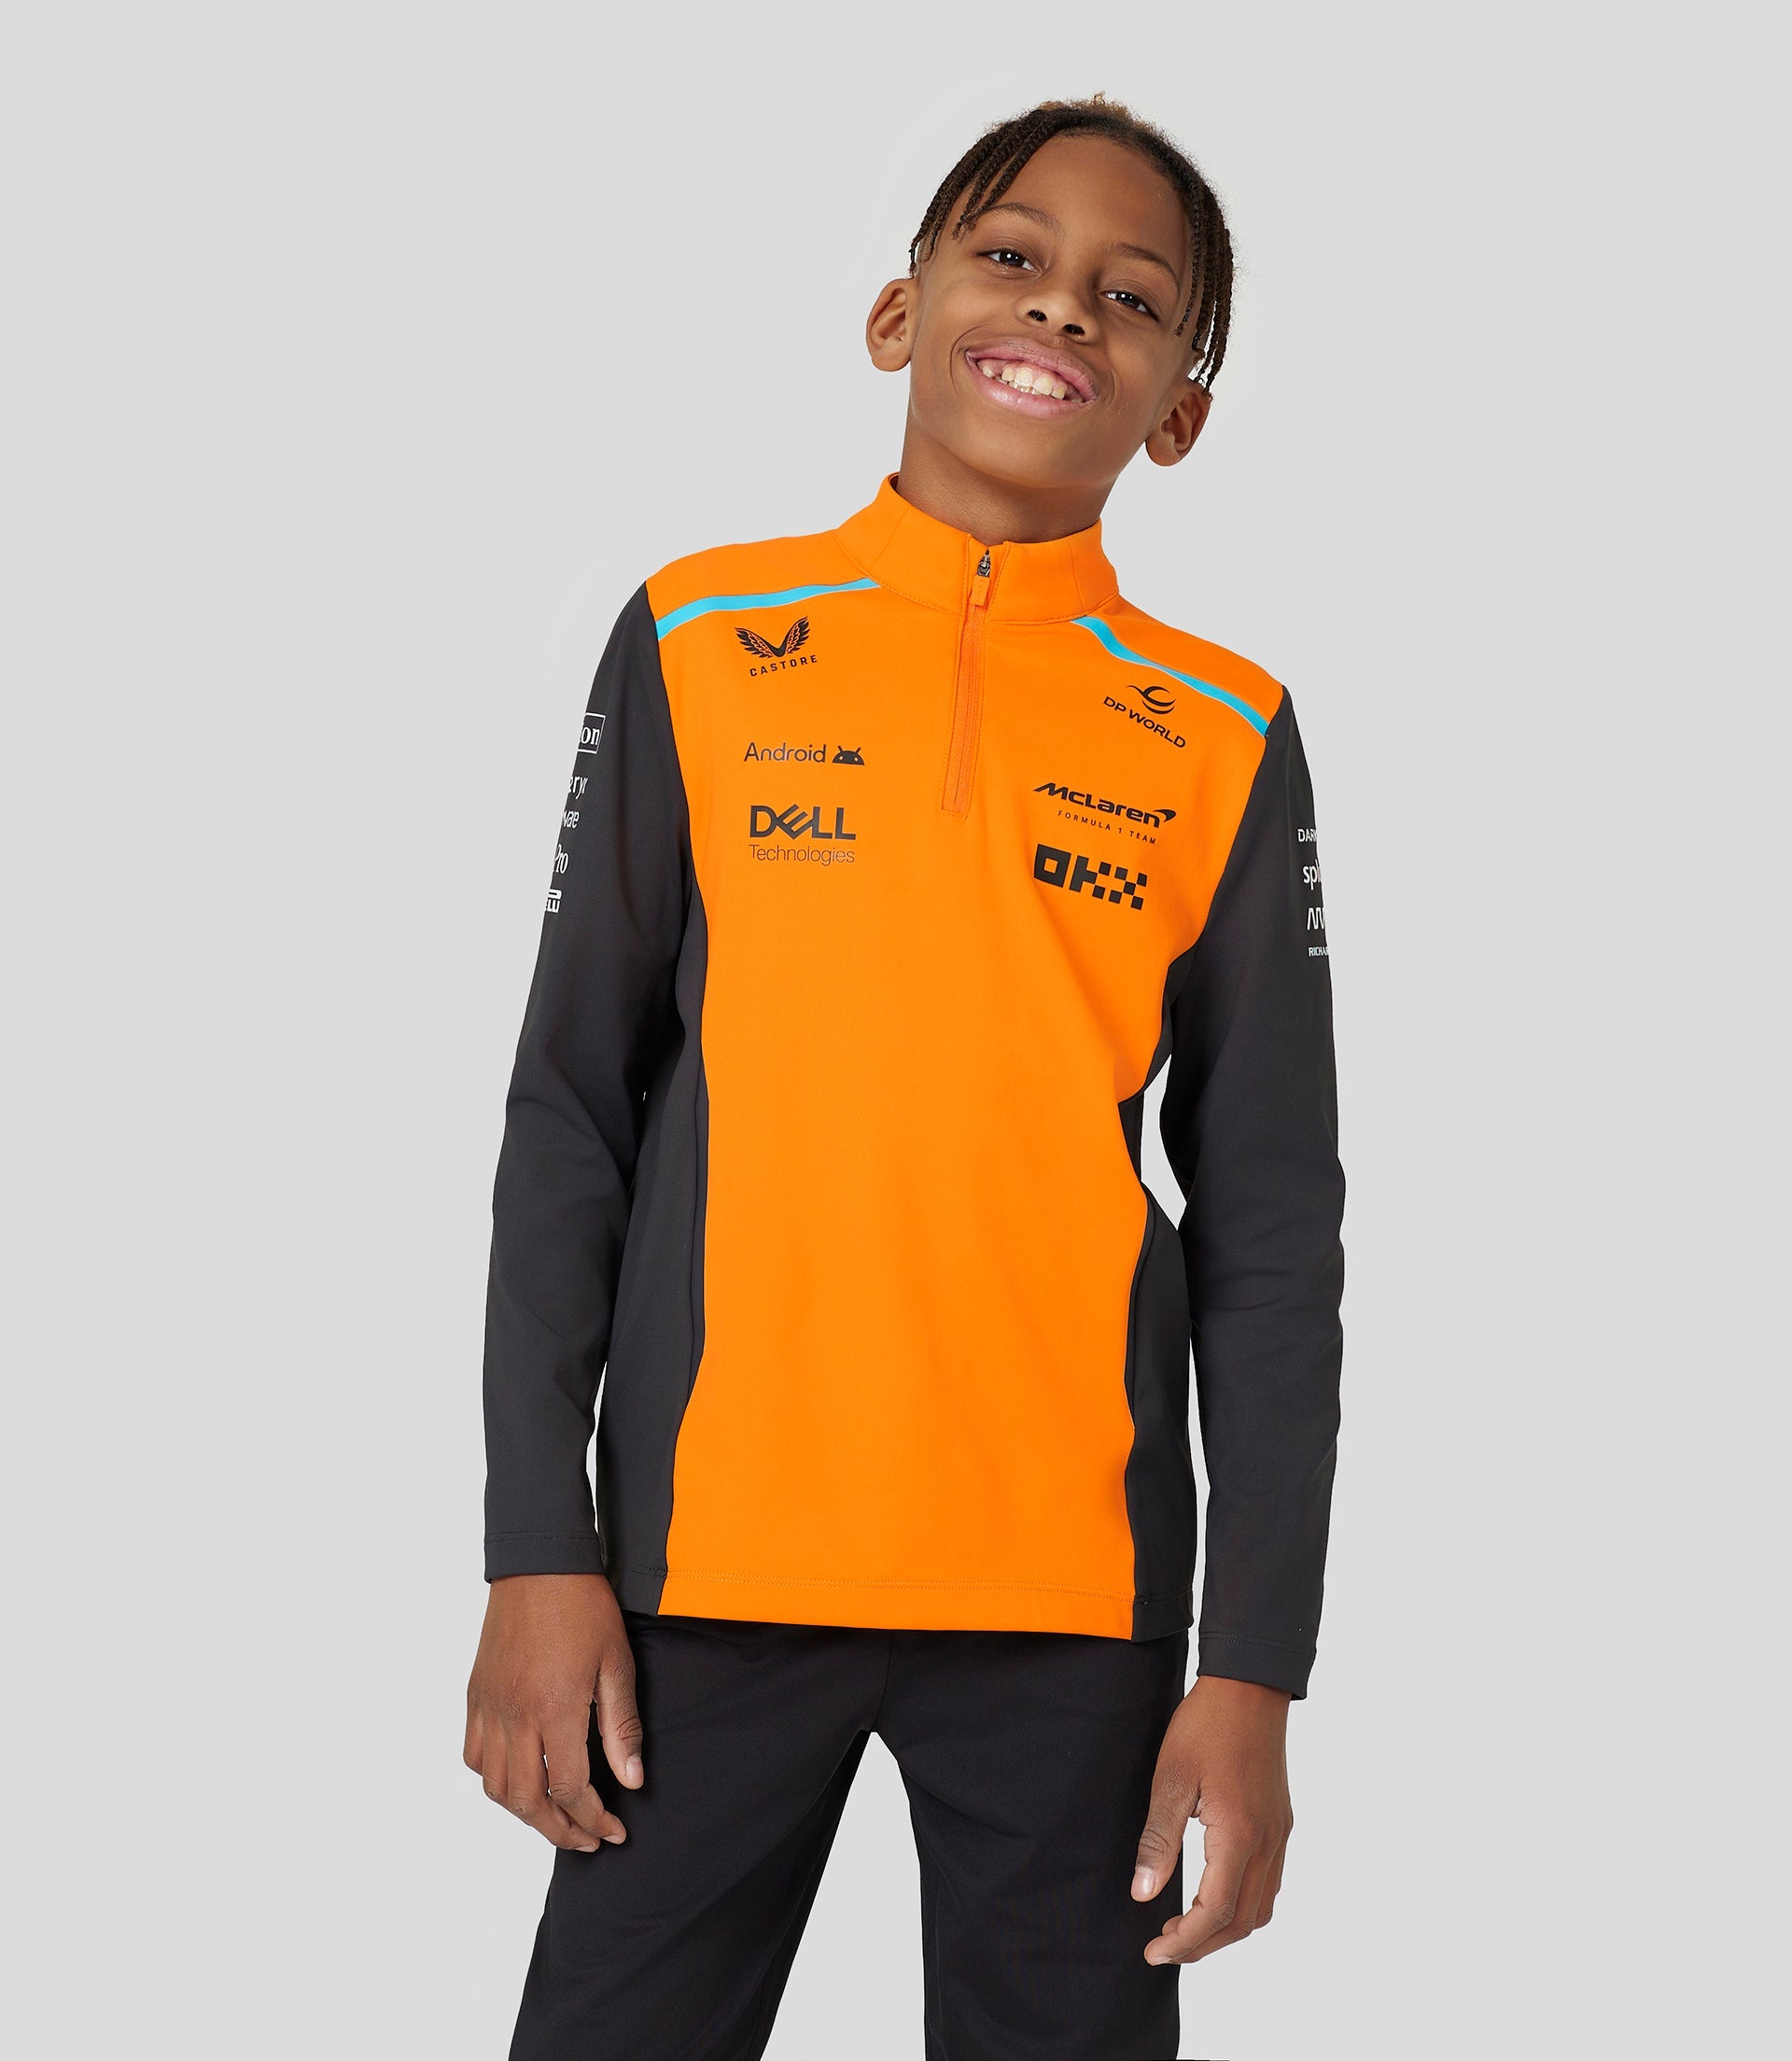 McLaren Junior Official Teamwear Quarter Zip Top Oscar Piastri Formula 1